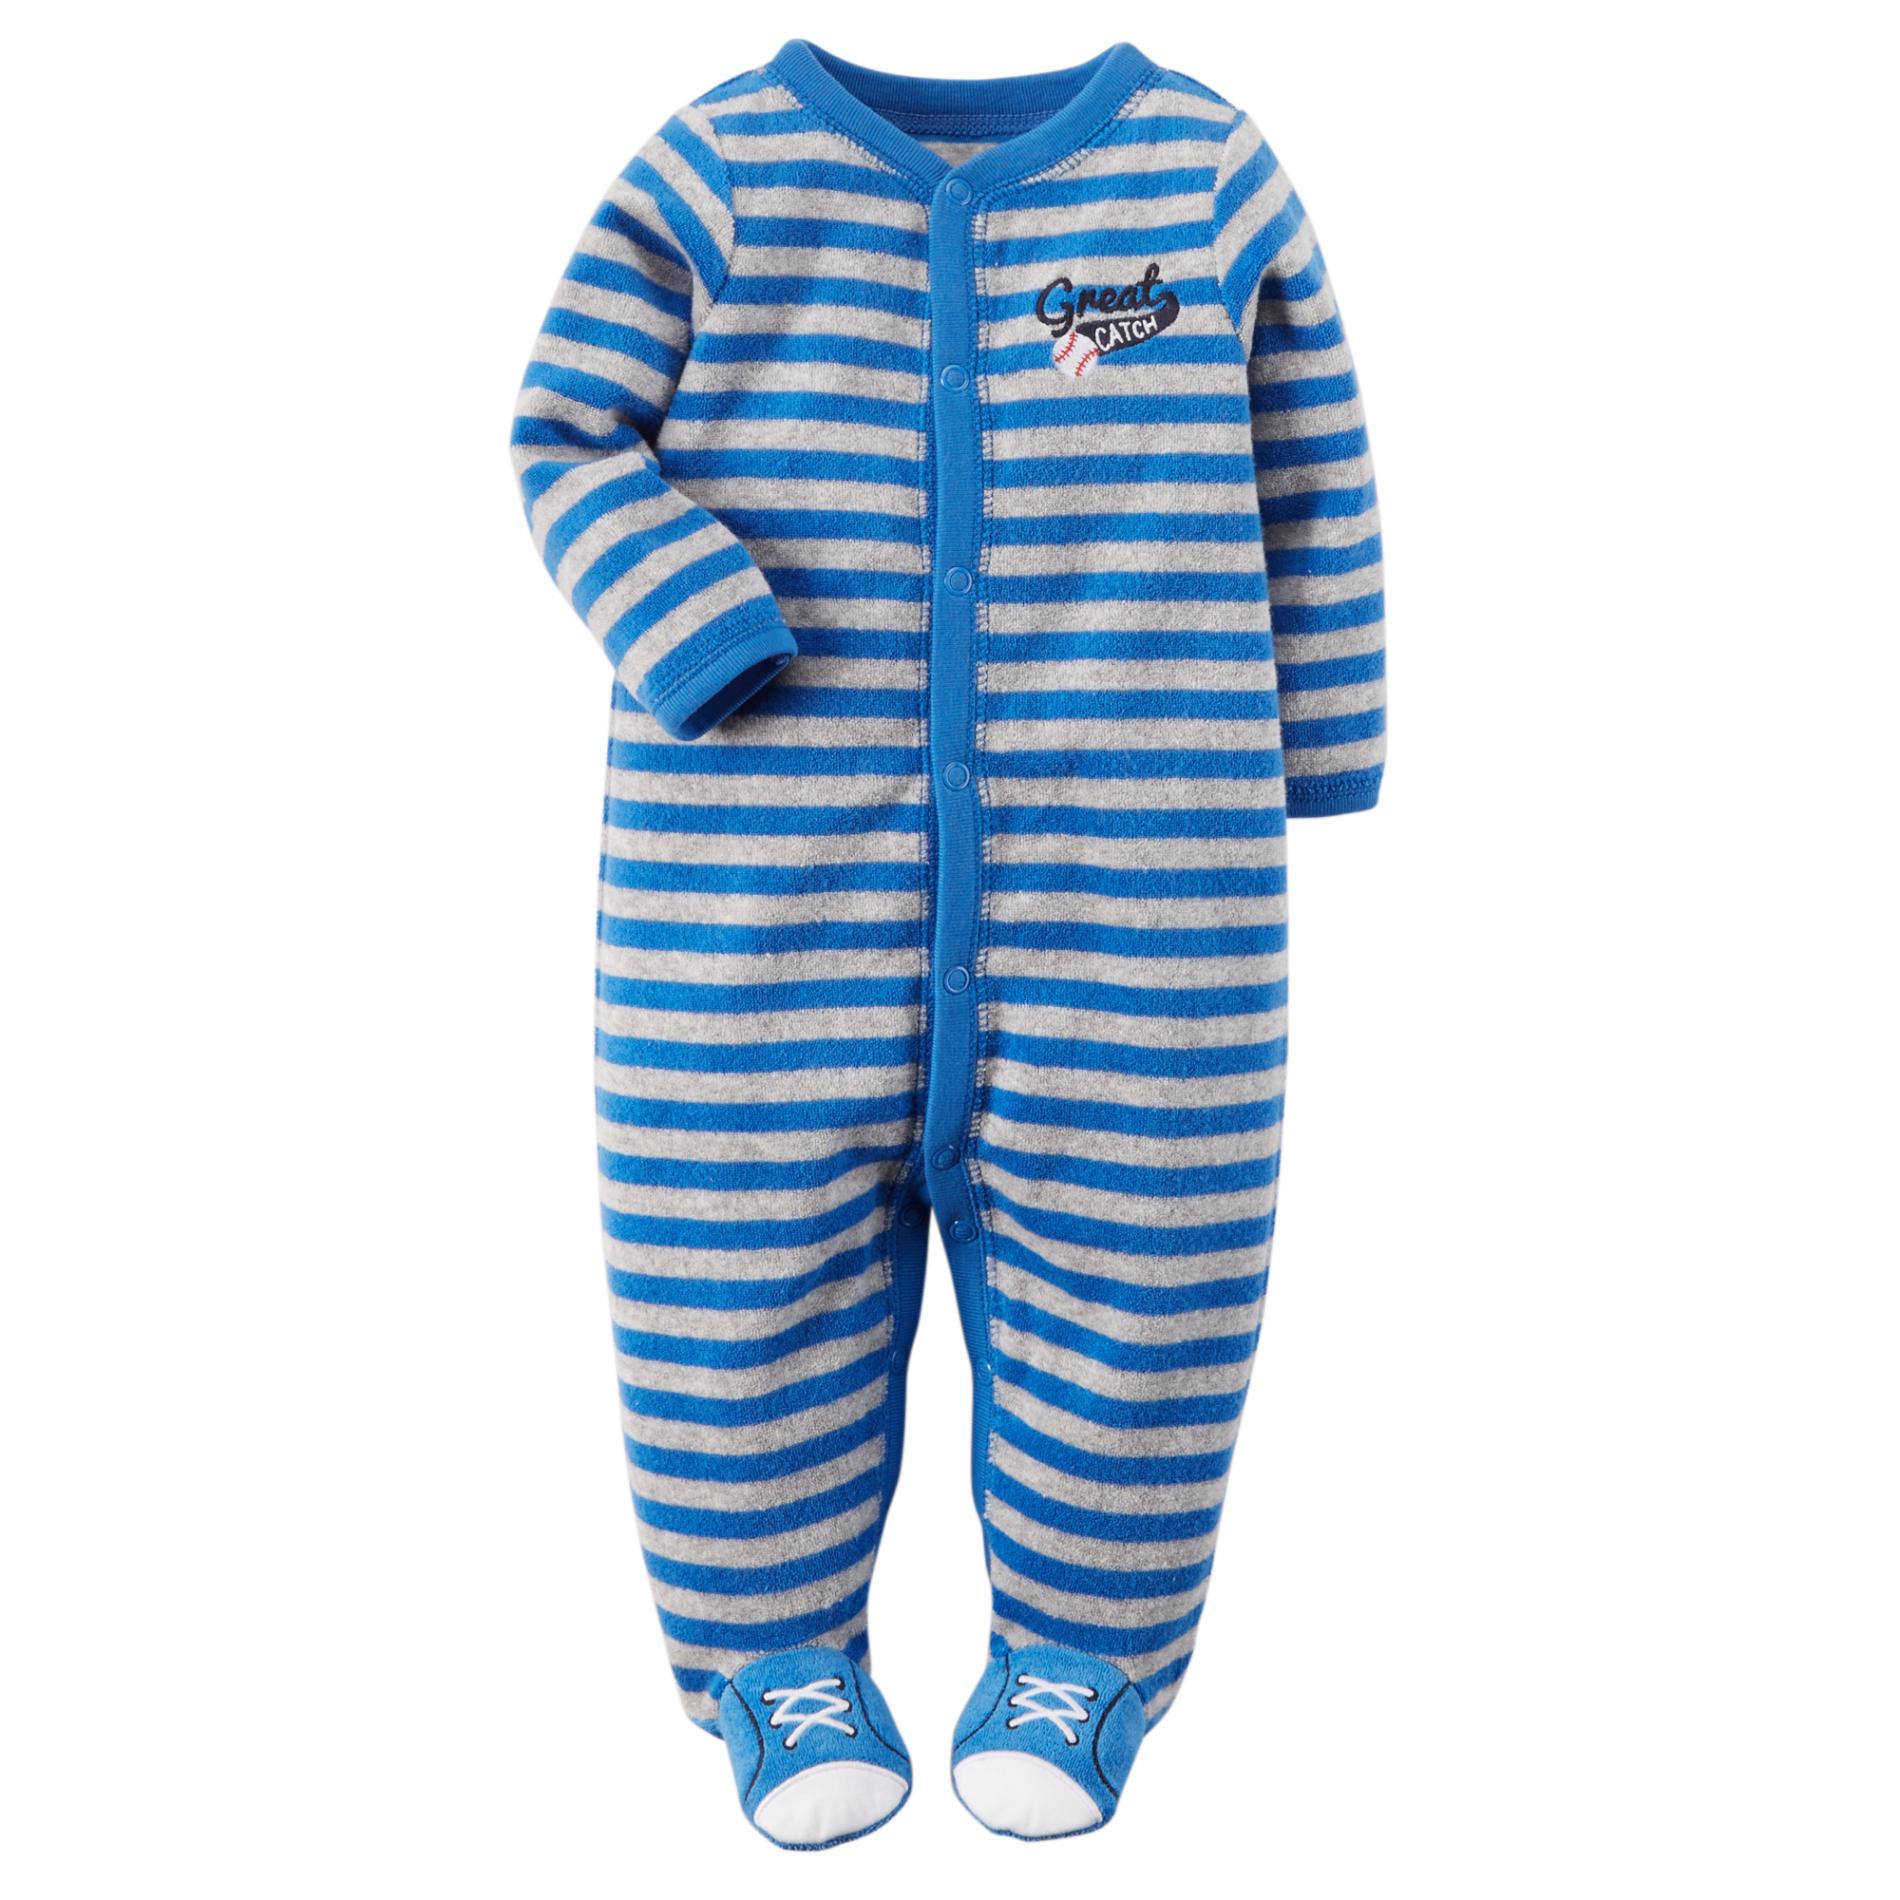 Carter's Newborn Boy's Terry Cloth Sleeper Pajamas Great Catch Shop Your Way Online